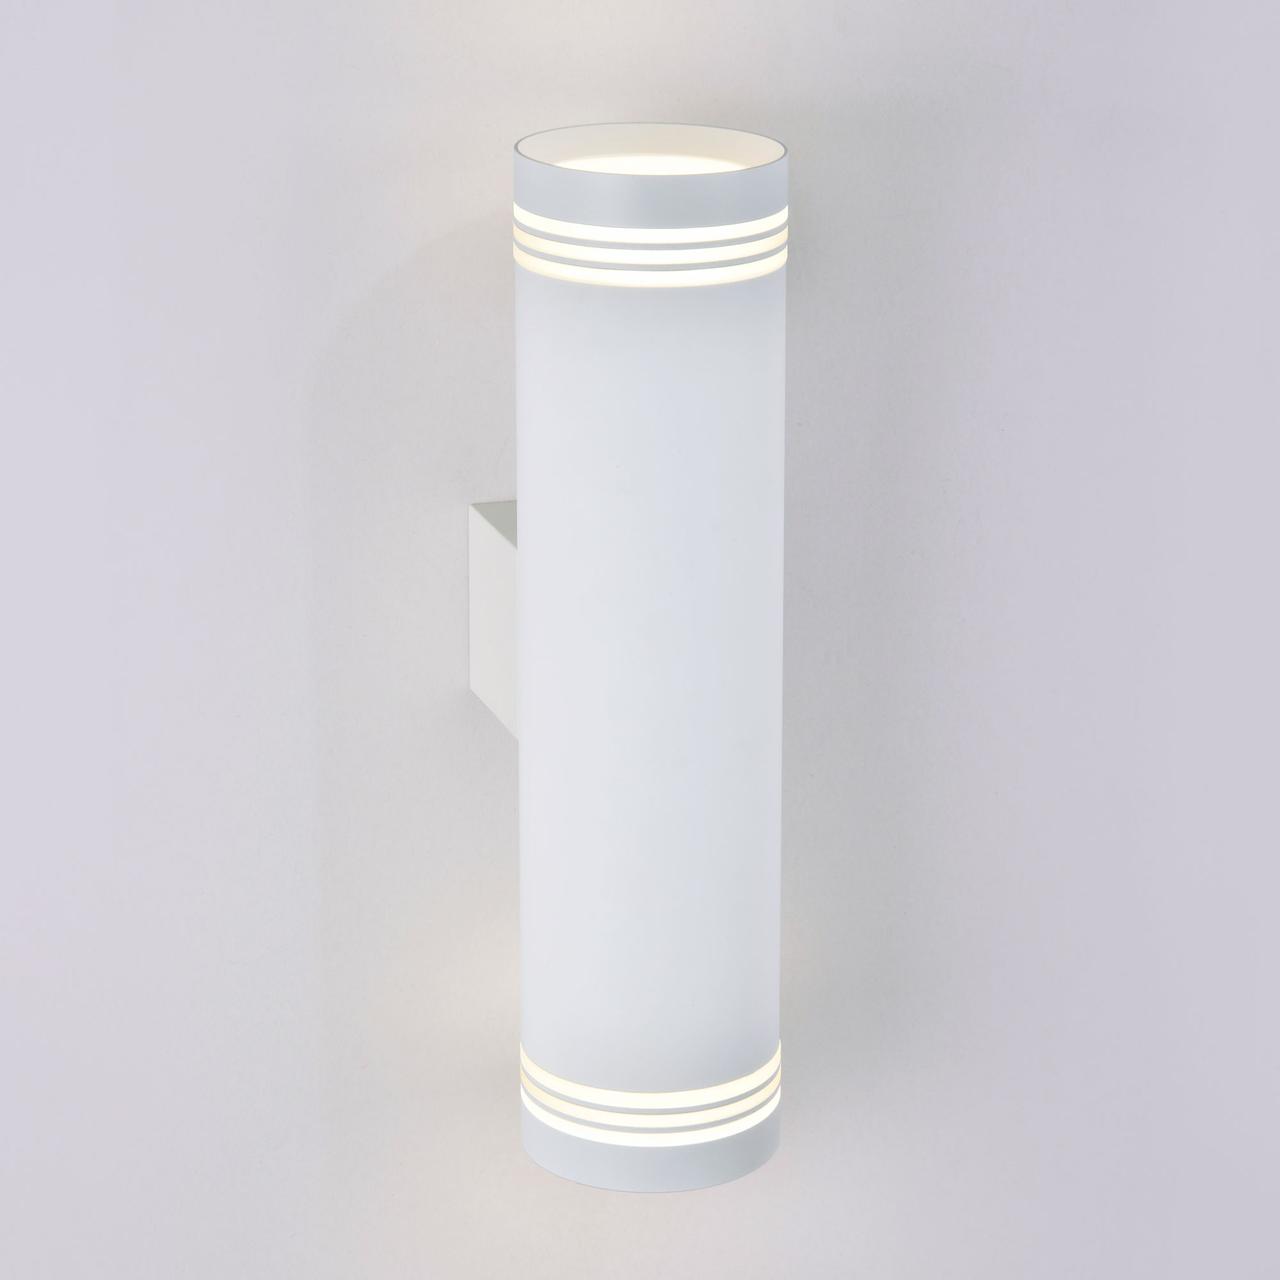 Настенный светодиодный светильник Selin LED белый  MRL LED 1004